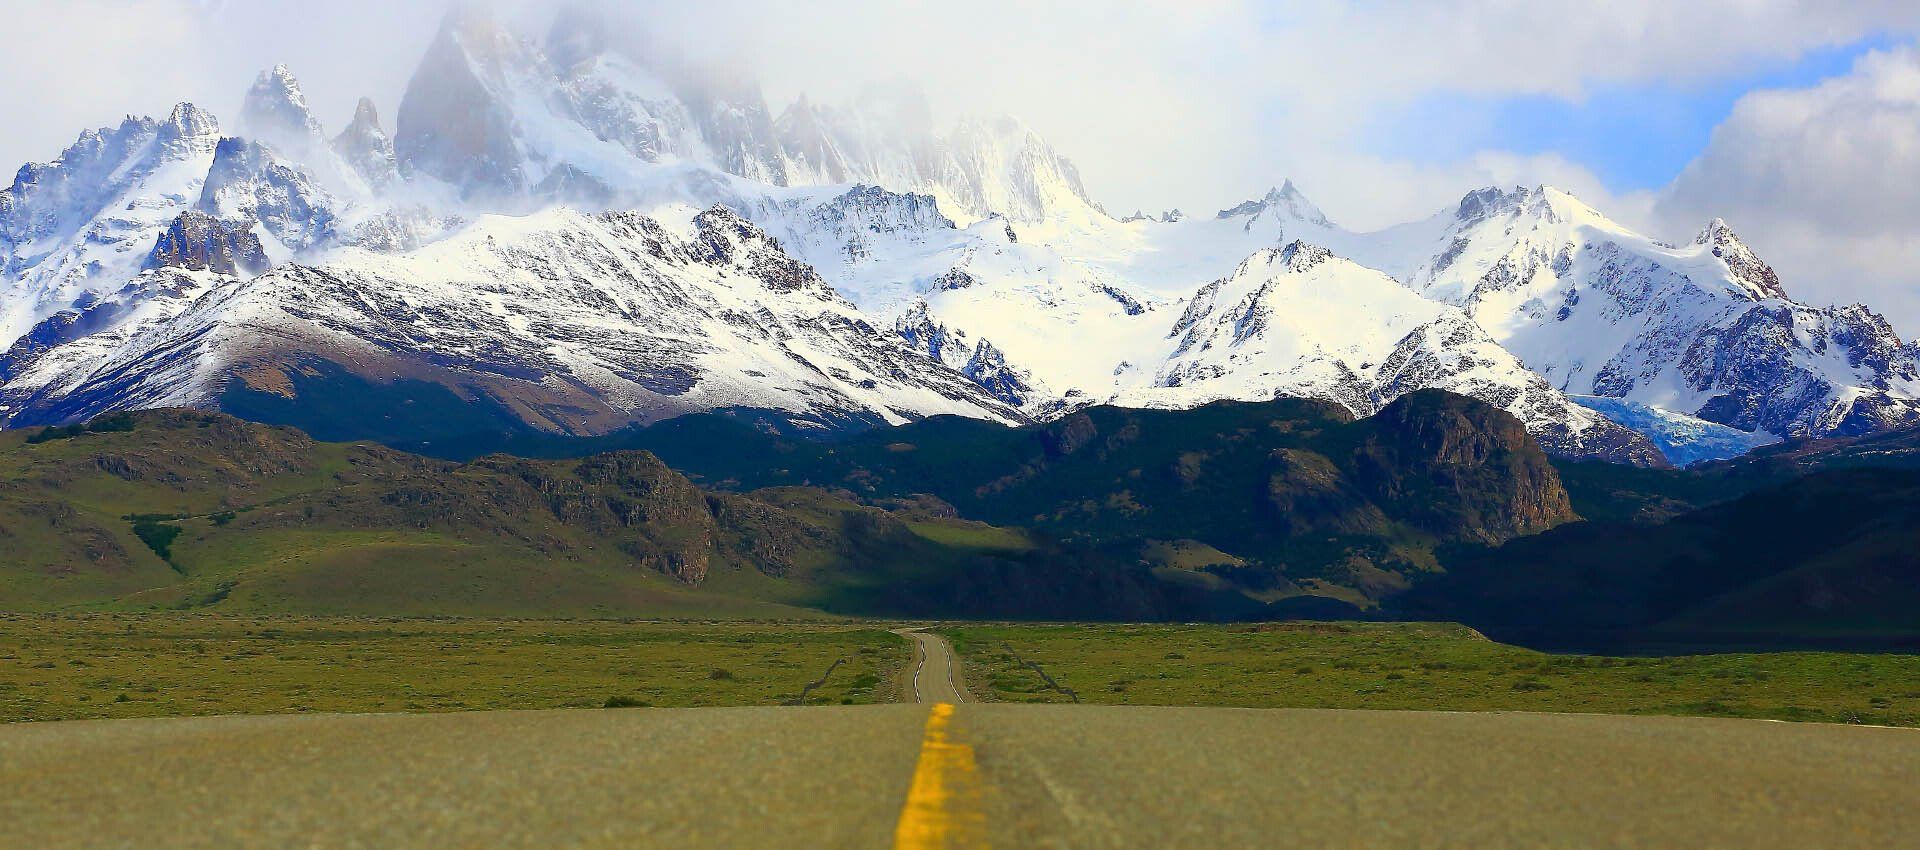 road leading toward mountains